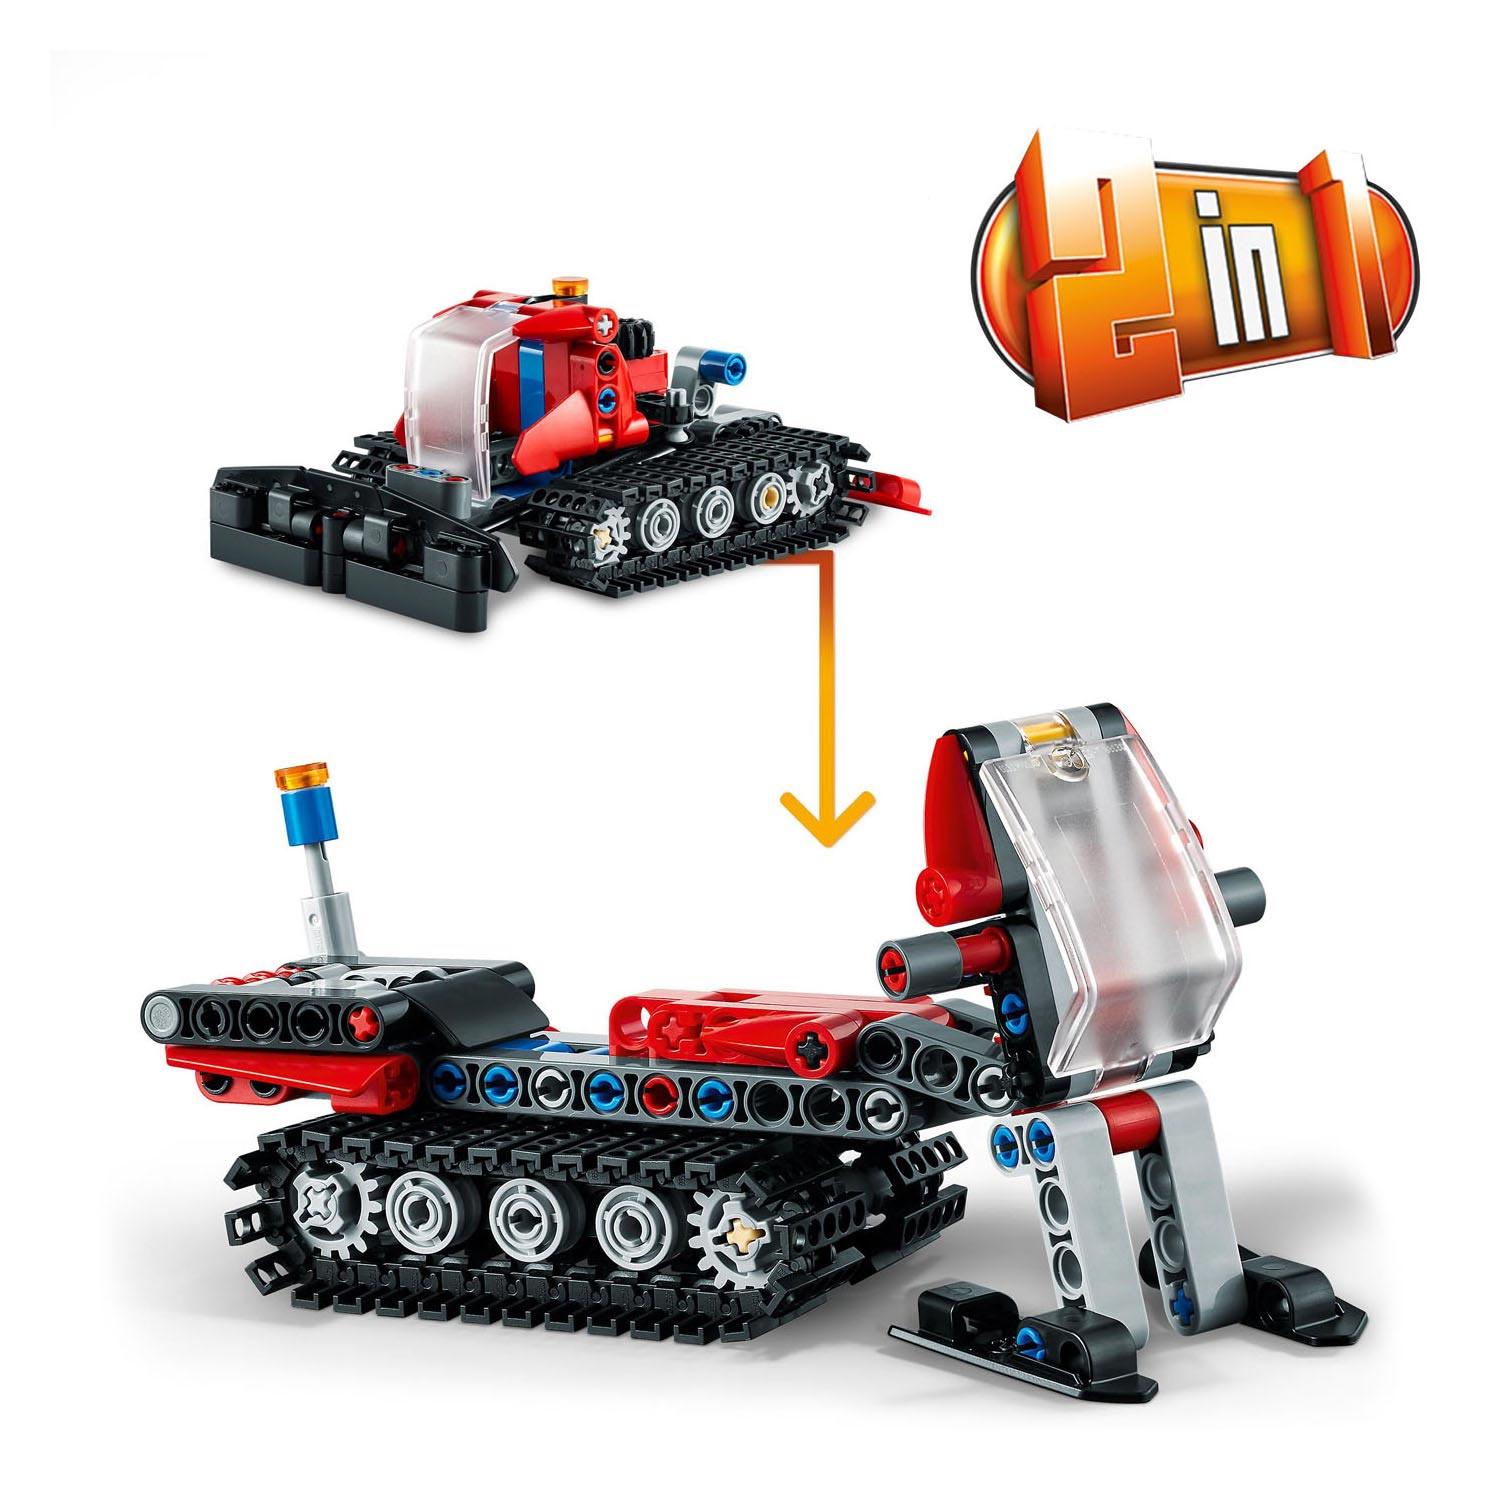 LEGO Technic 42148 Sneeuwruimer